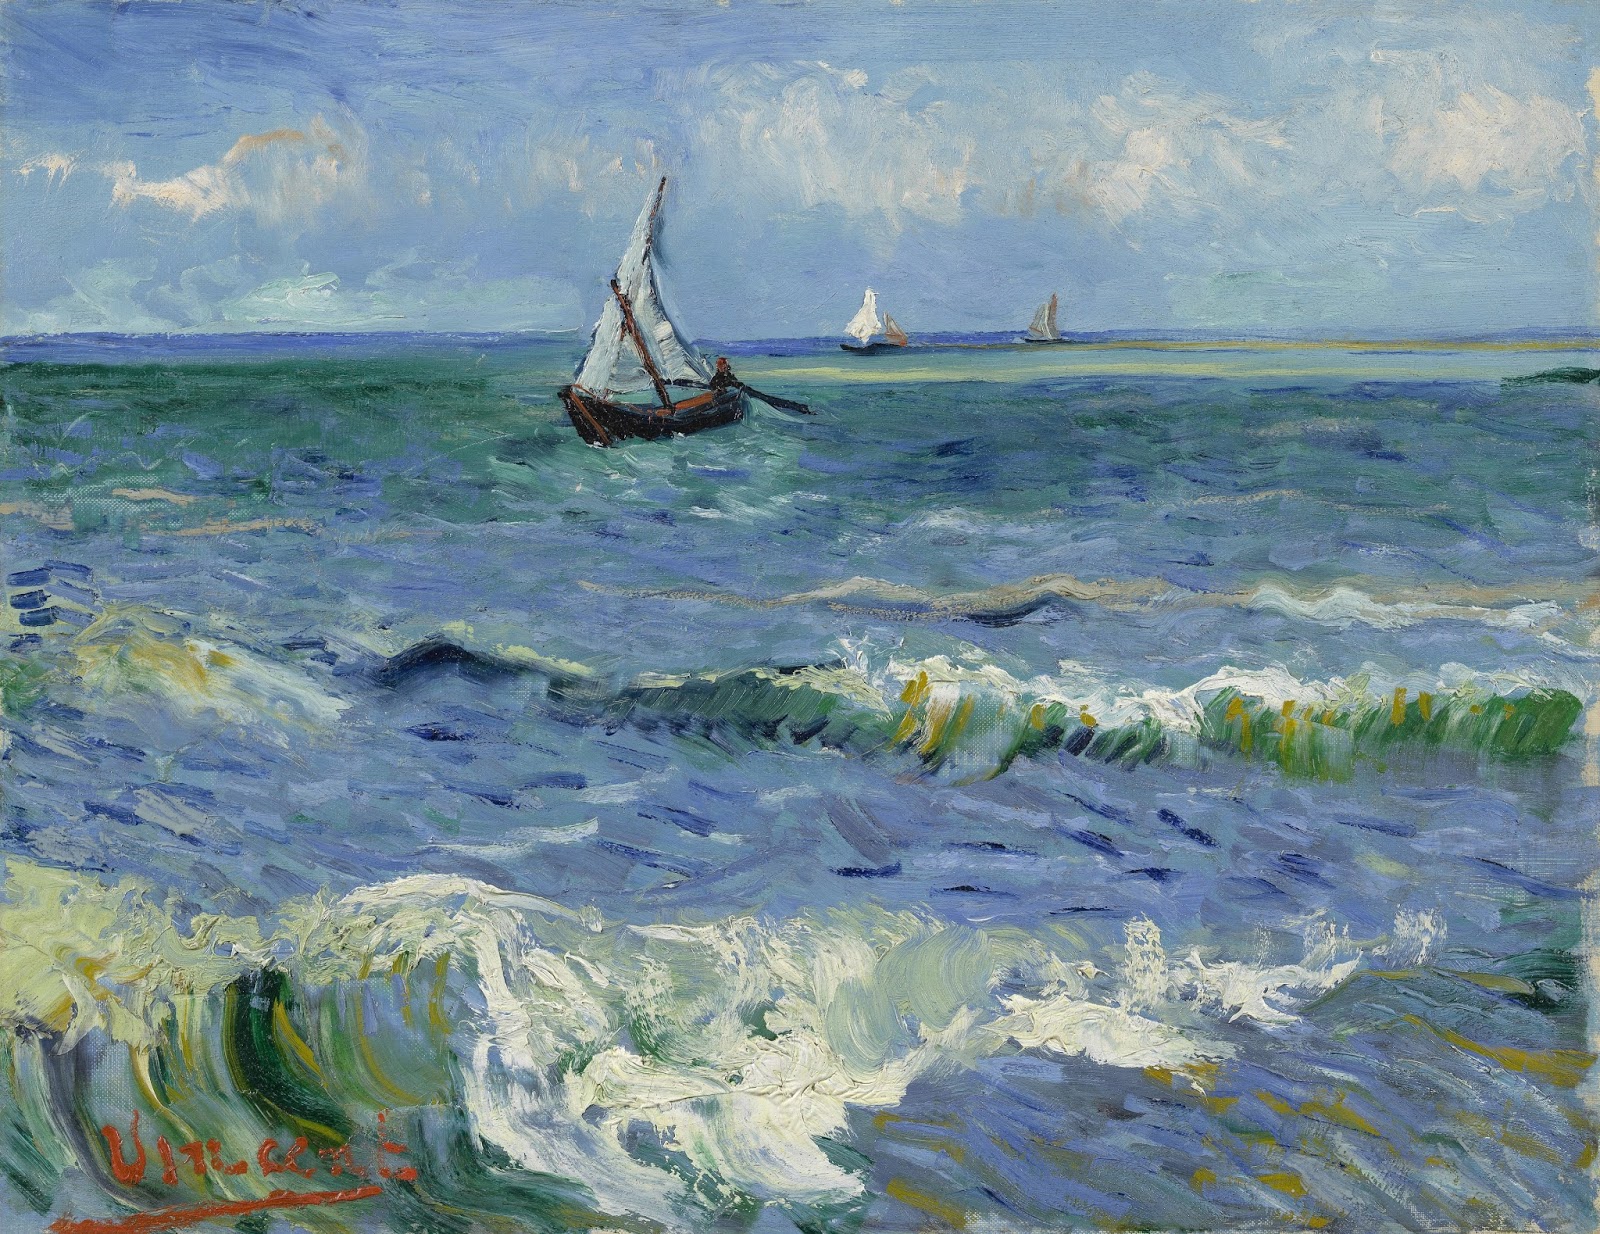 Vincent+Van+Gogh-1853-1890 (486).jpg